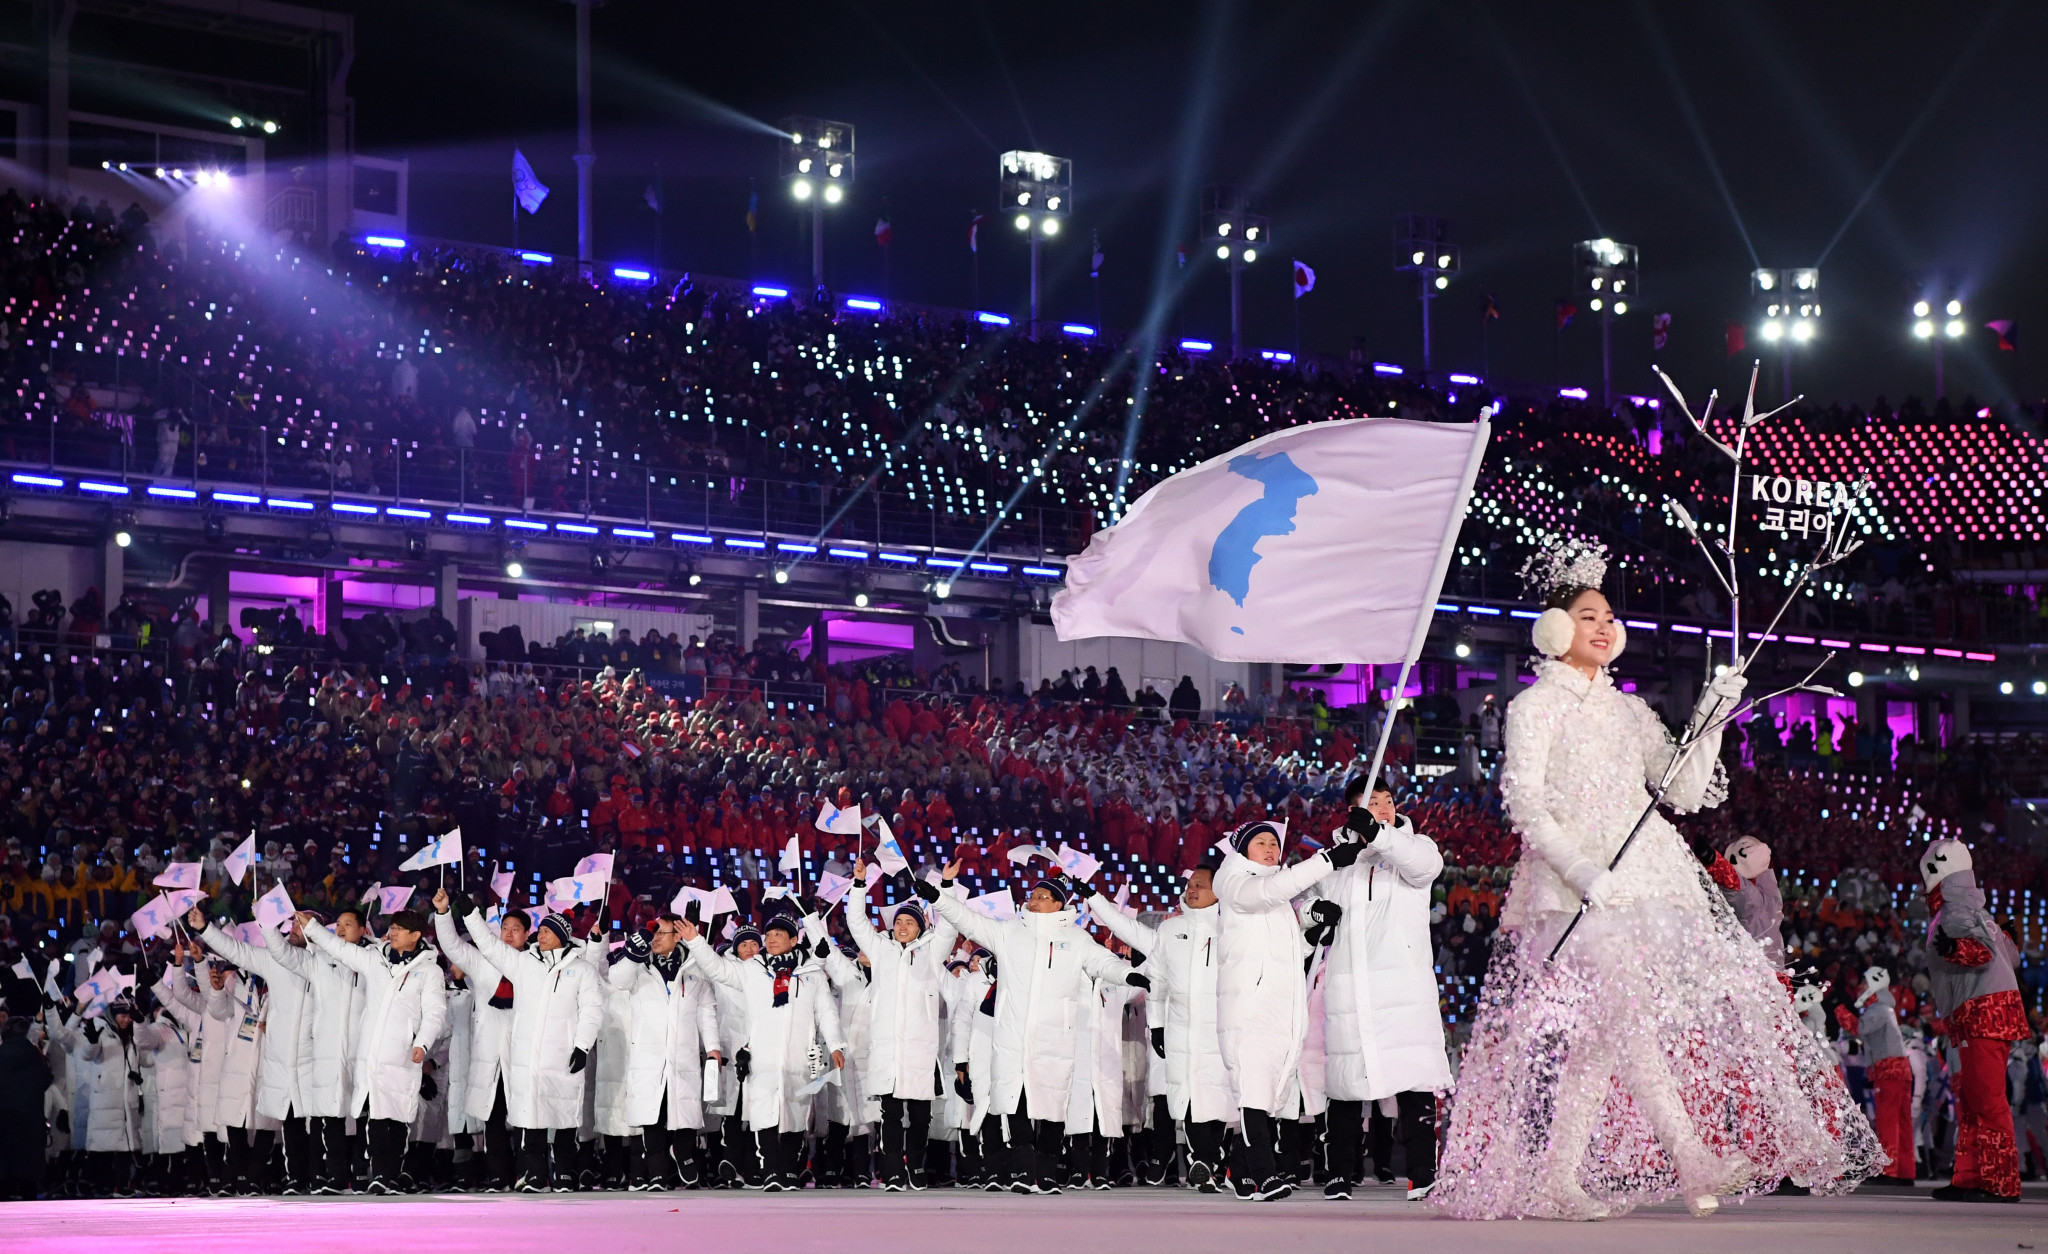 Pyeongchang 2018 Opening Ceremony